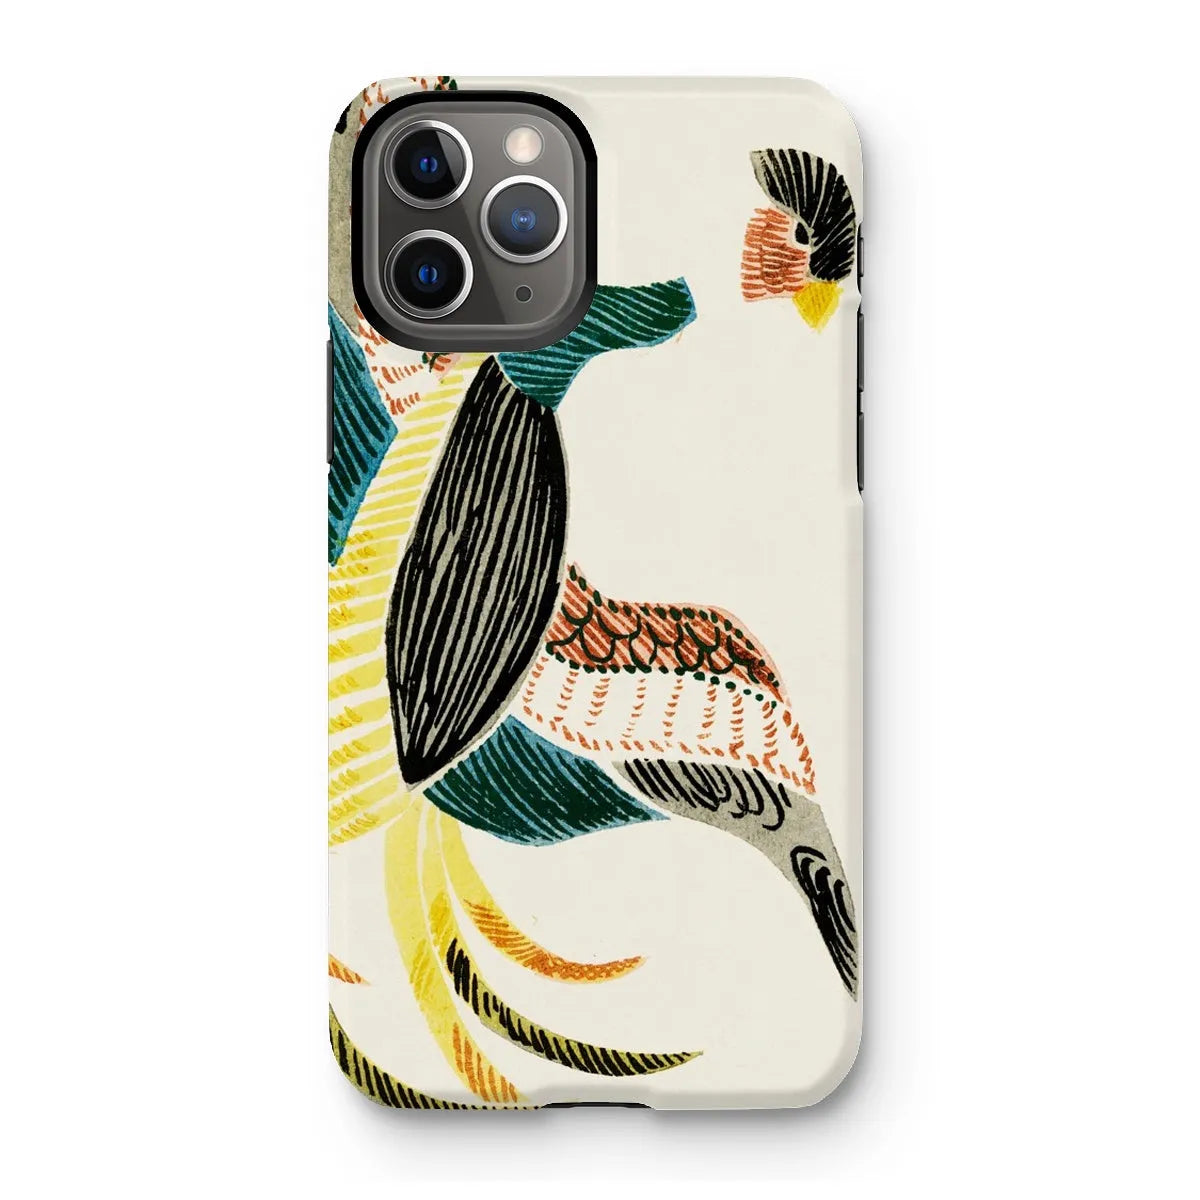 Woodblock Crane - Japanese Bird Phone Case - Taguchi Tomoki - Iphone 11 Pro / Matte - Mobile Phone Cases - Aesthetic Art